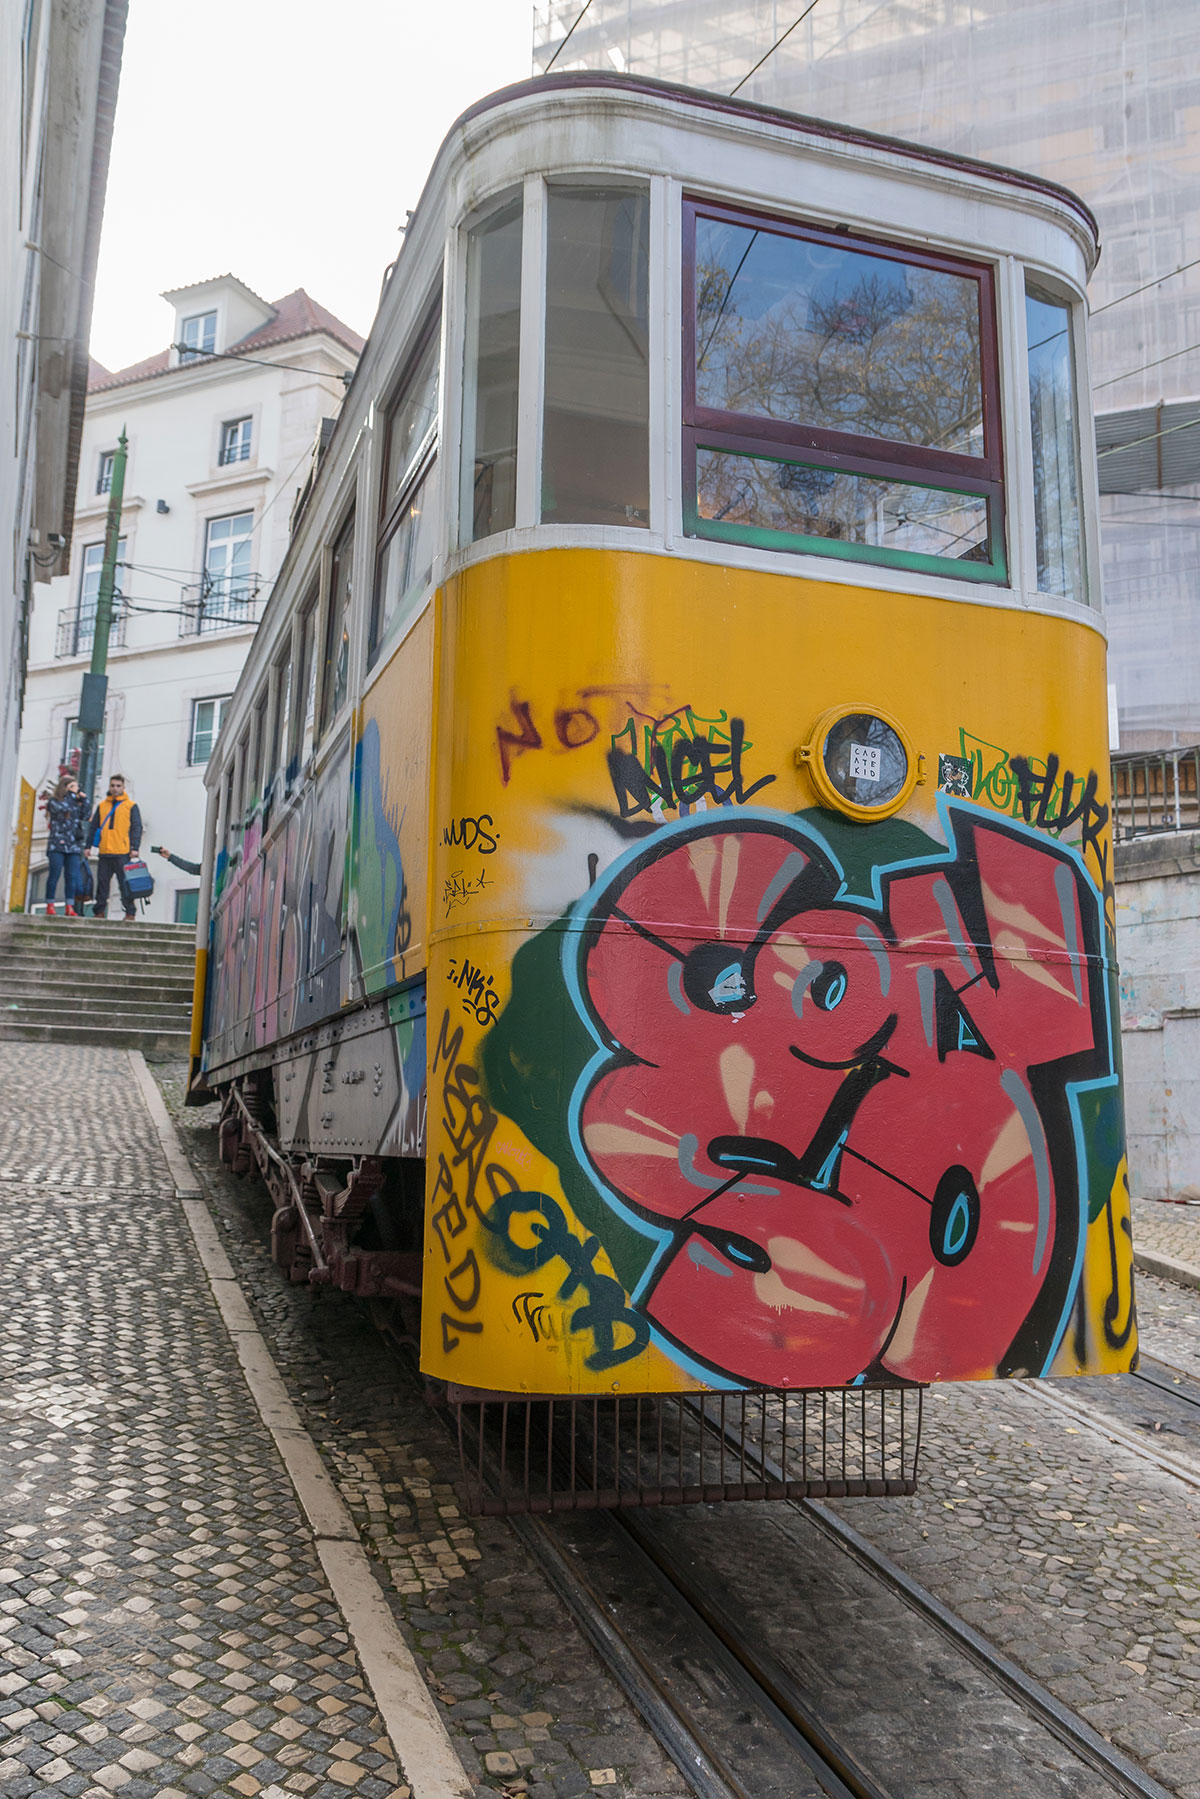 Portugal, Lisbon, tram